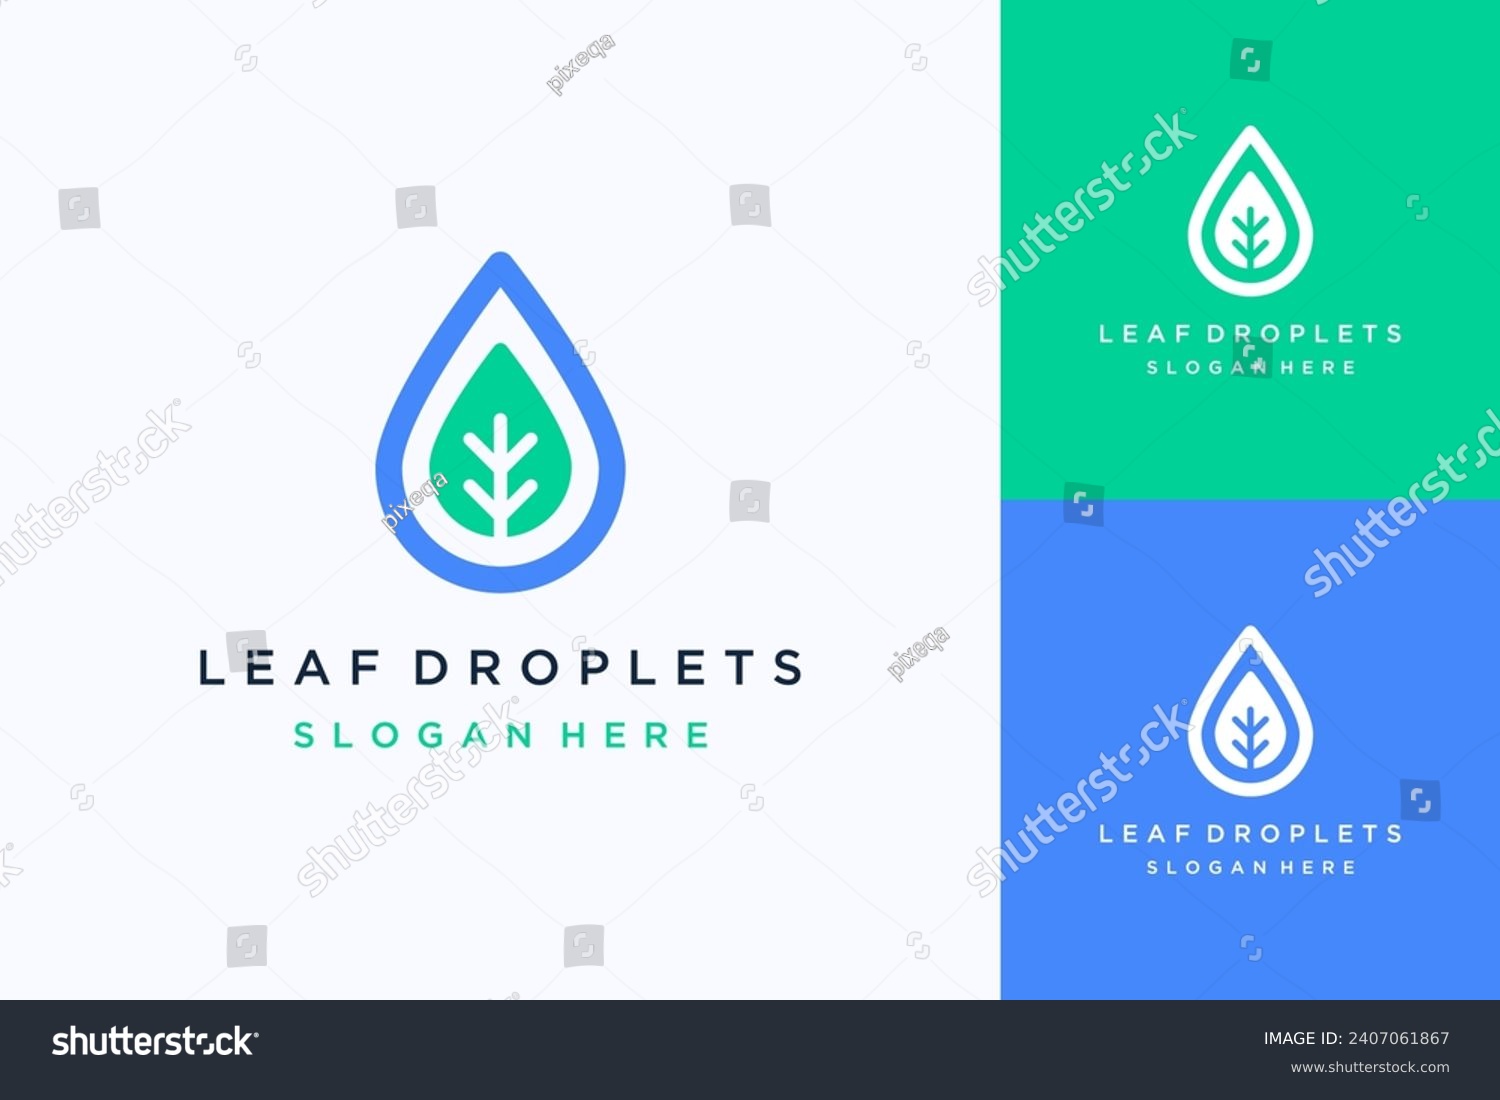 SVG of natural design logo or water droplets and leaves svg